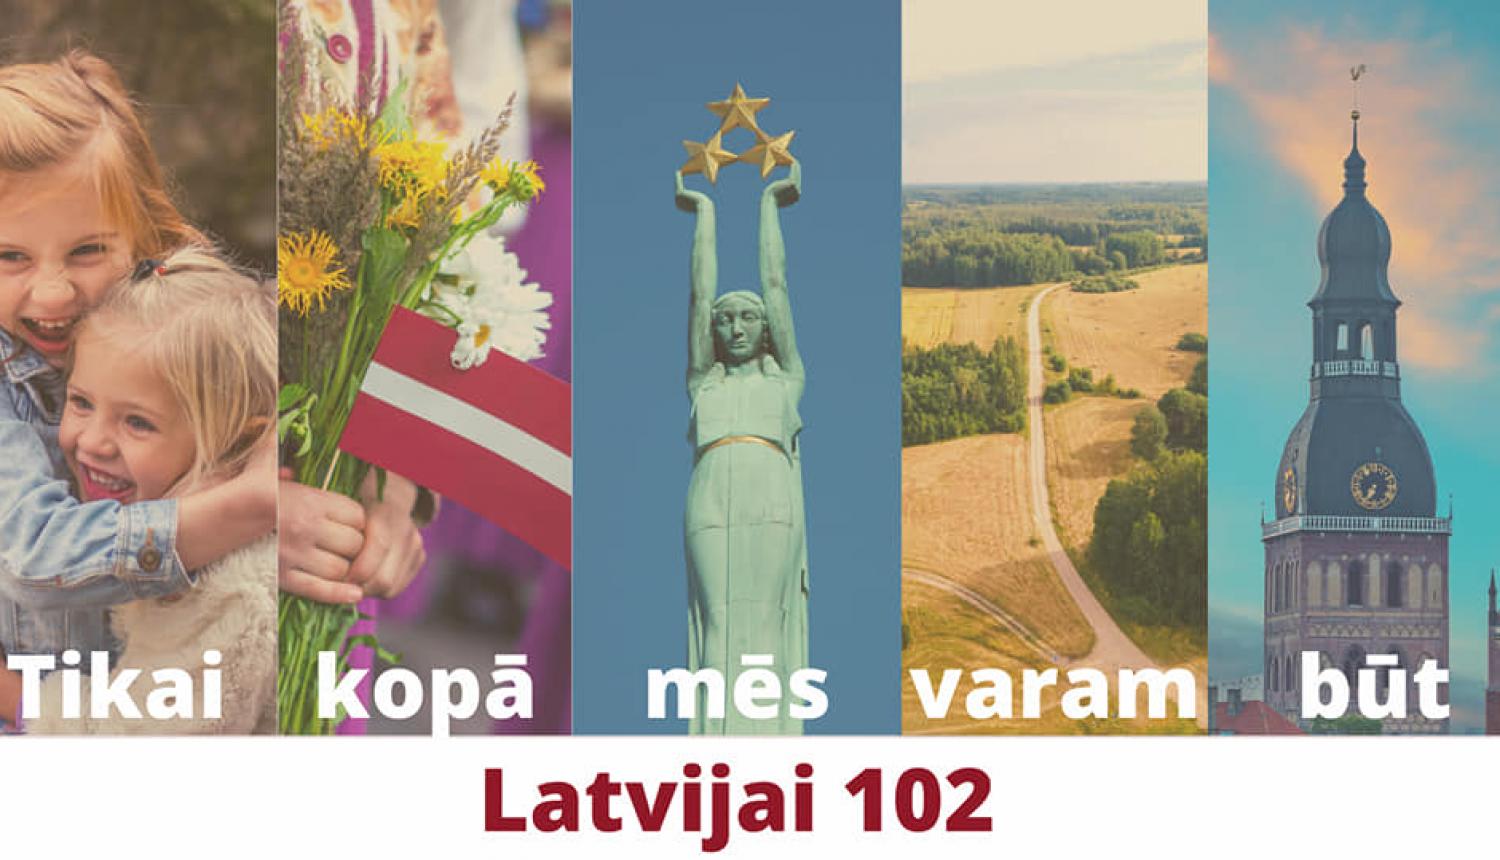 Tikai kopā mēs varam būt Latvijai